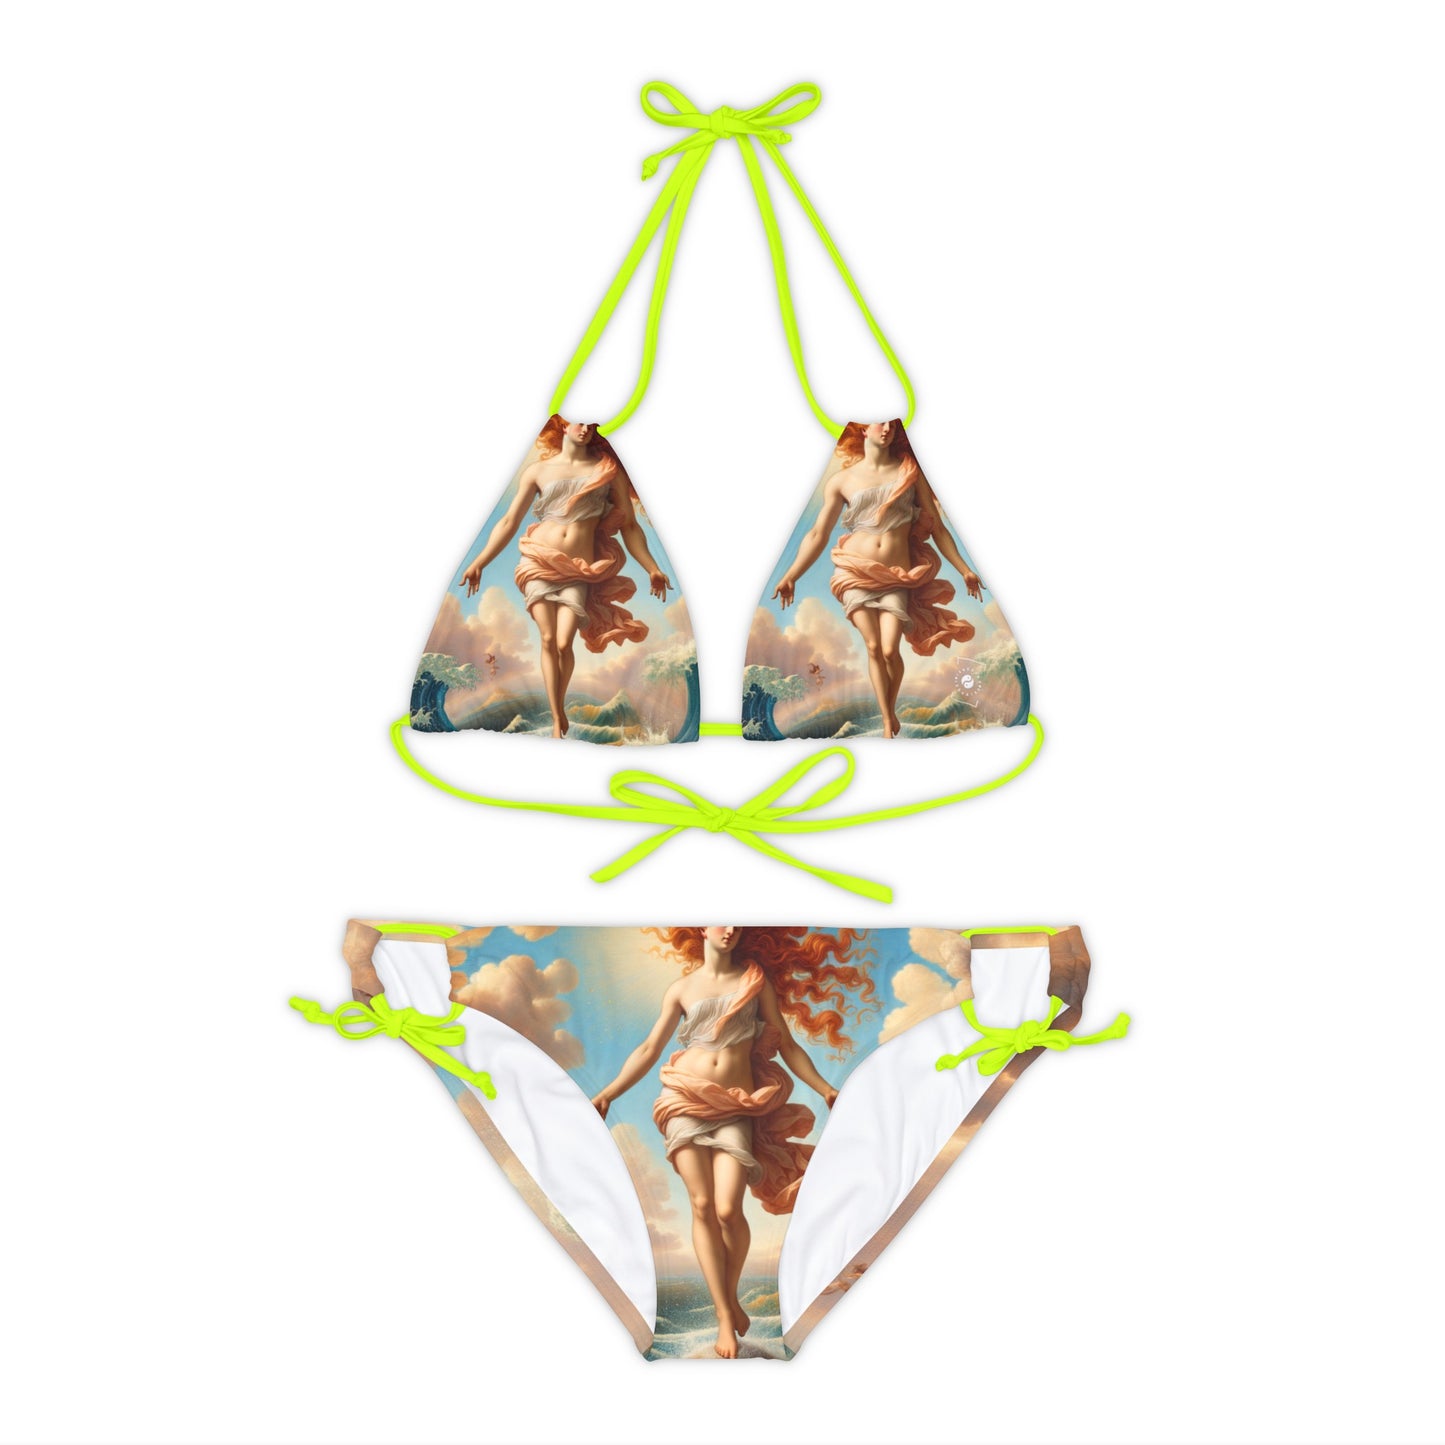 Rebirth of Venus - Lace-up Bikini Set